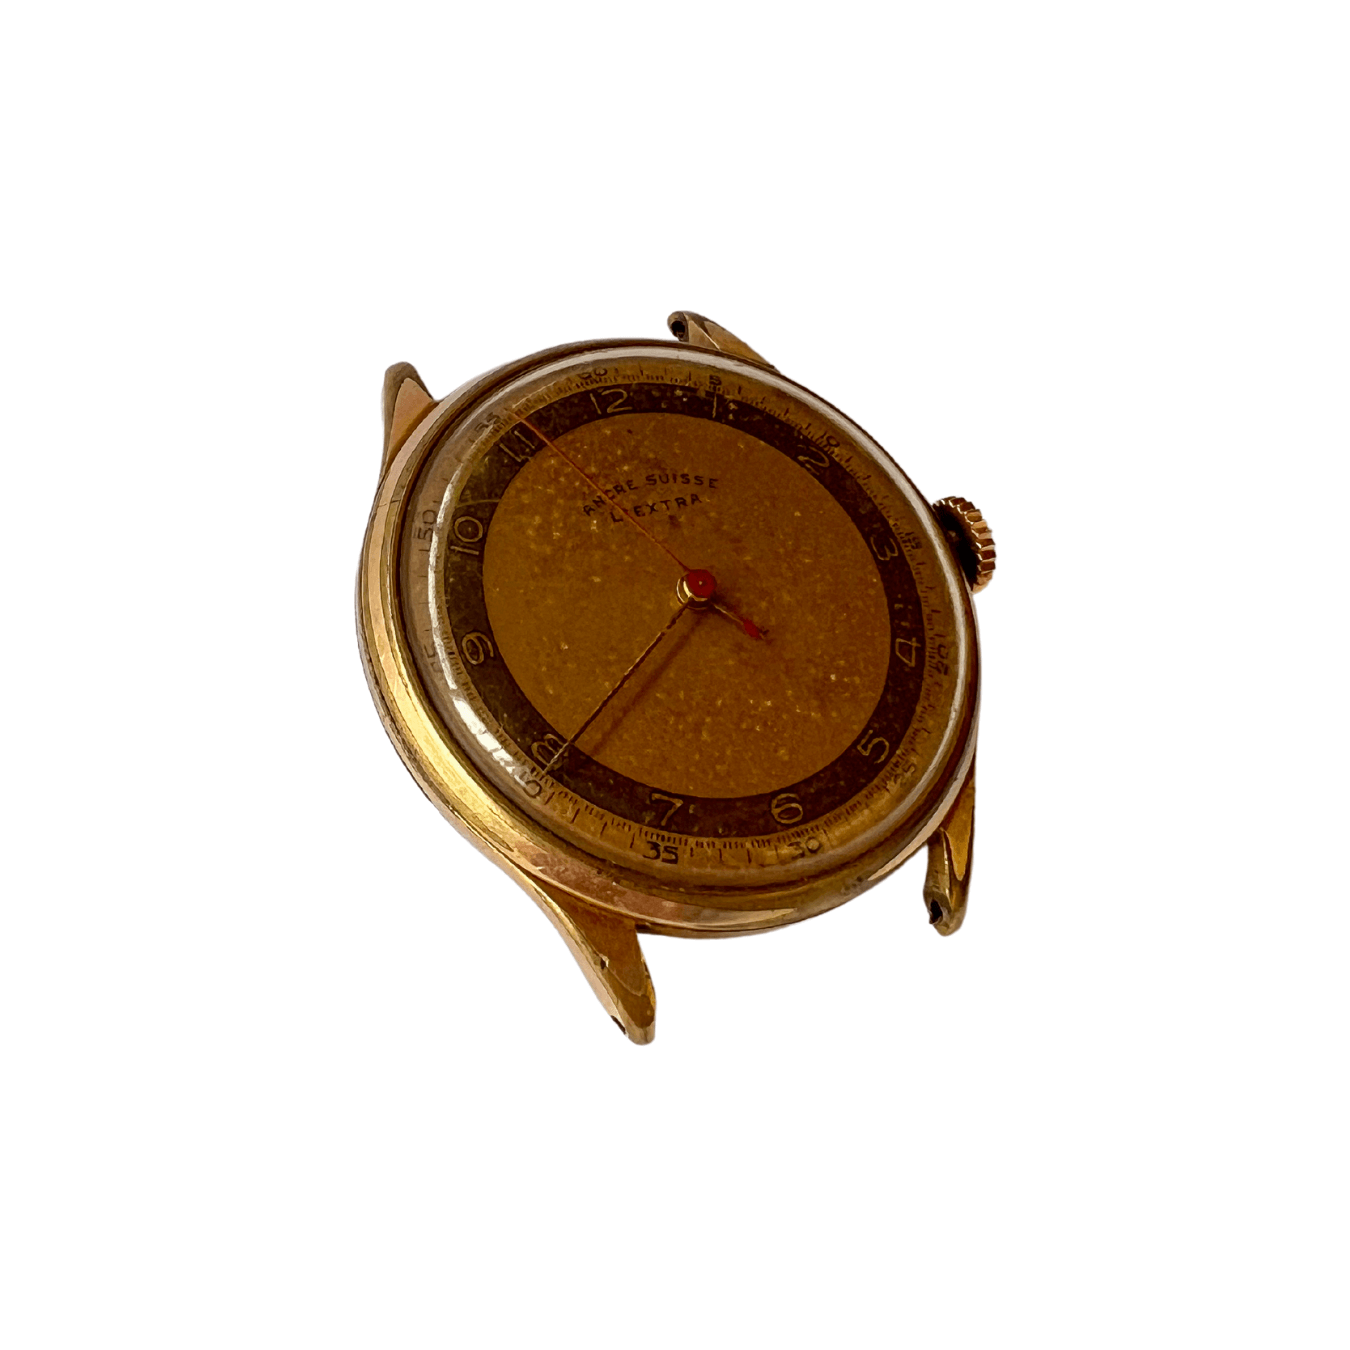 Relógio Vintage Suíço Banhado a Ouro de 1960